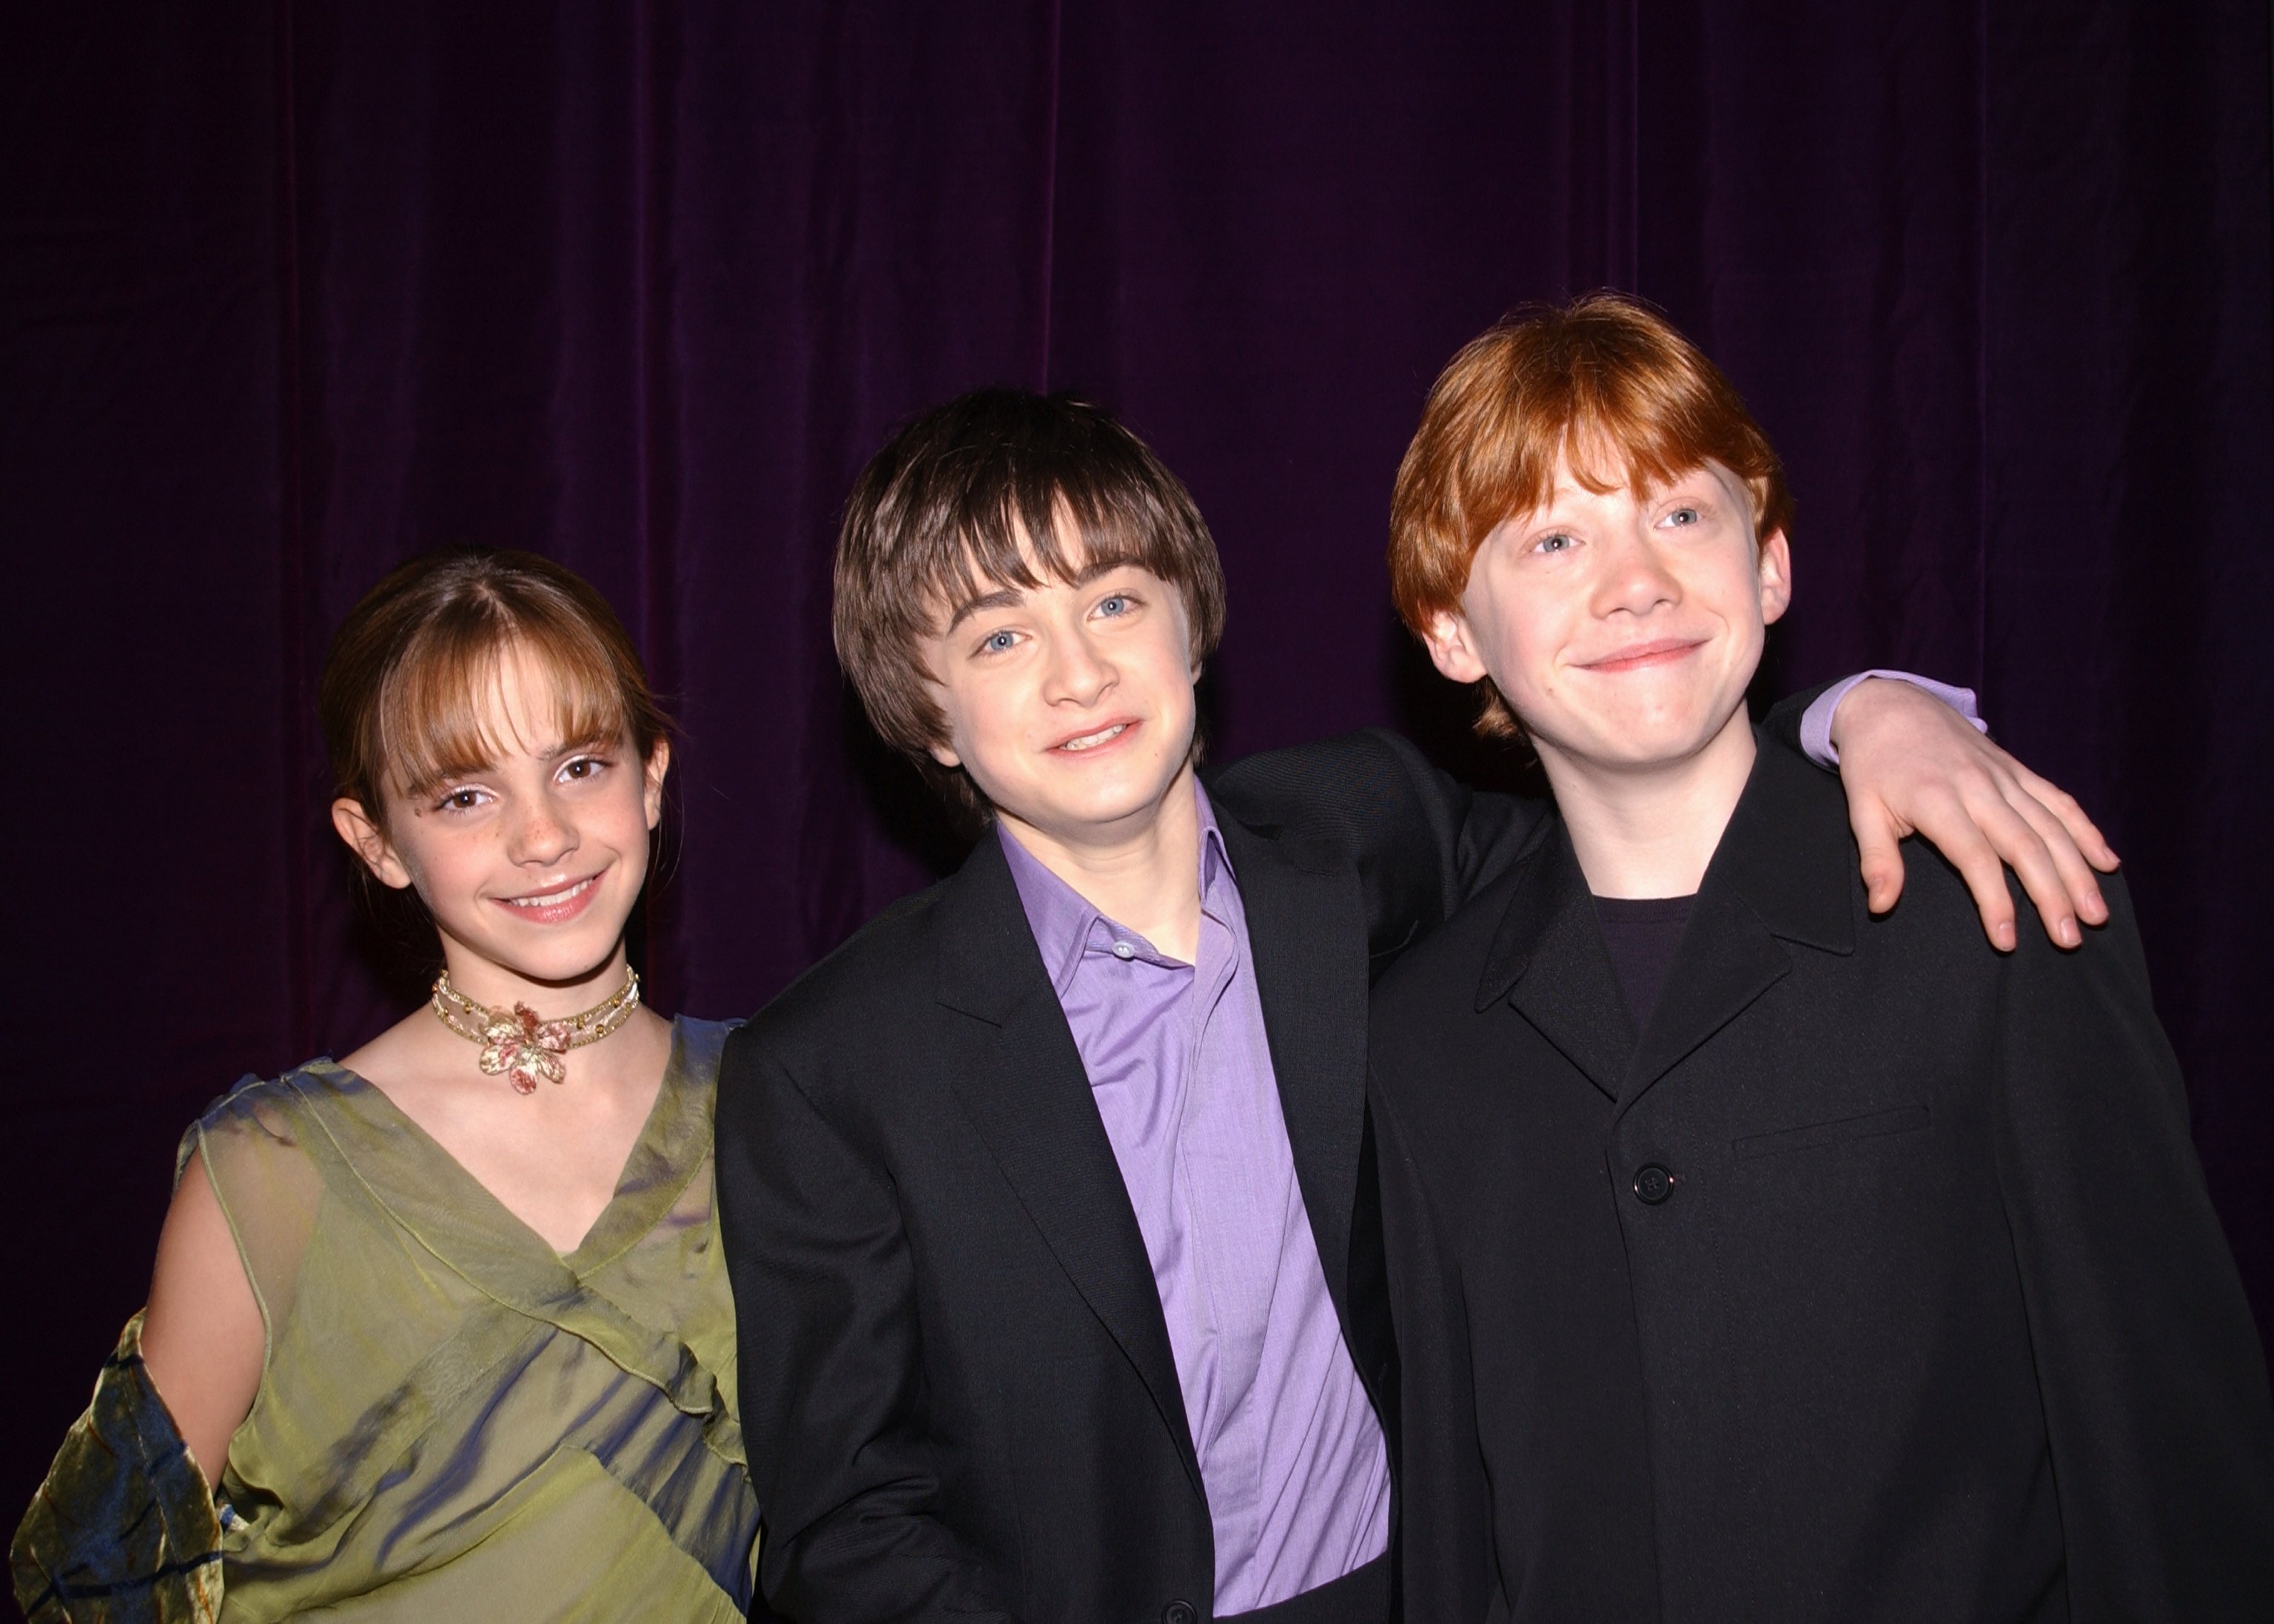 Harry Potter stars Emma Watson, Daniel Radcliffe, and Rupert Grint